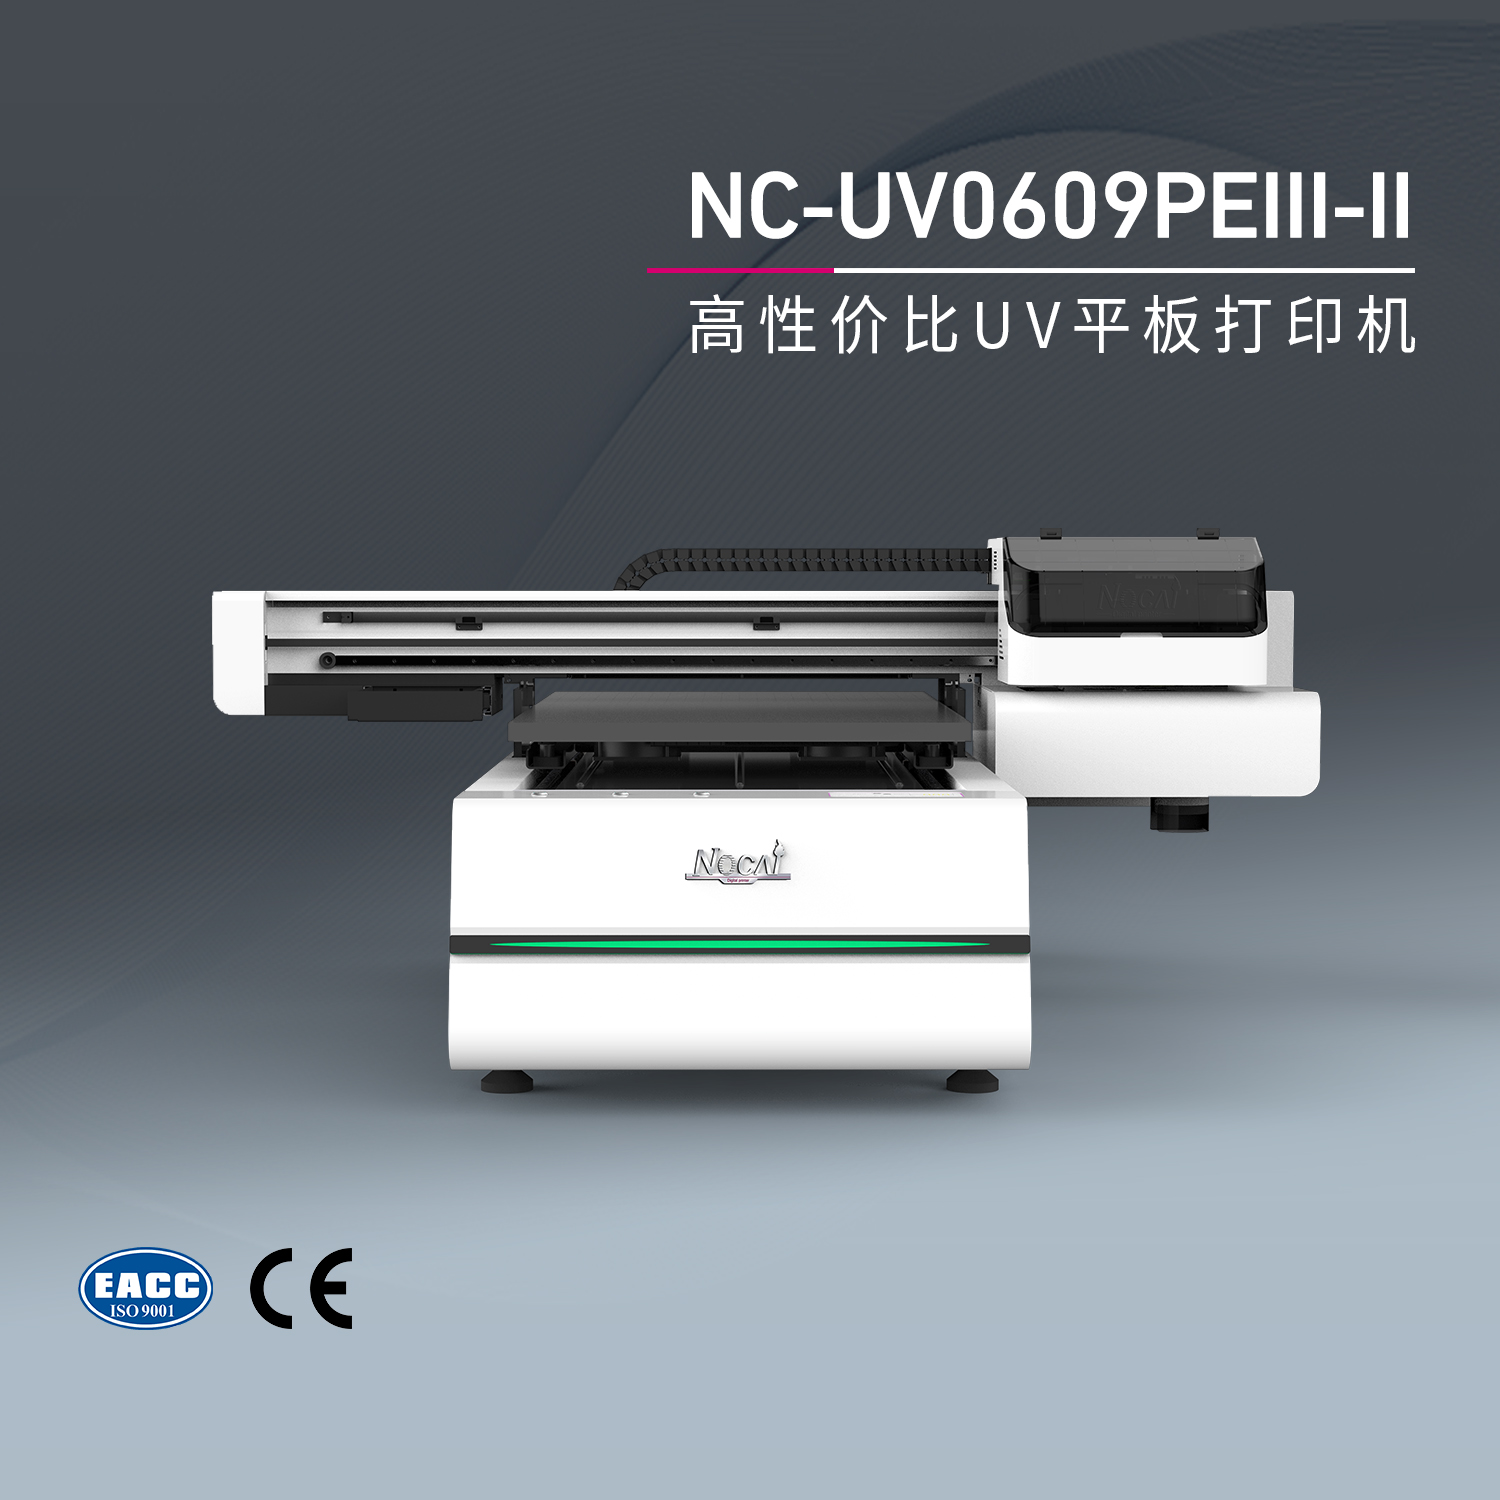 uv平板打印机打印分辨率是不是越高越好？